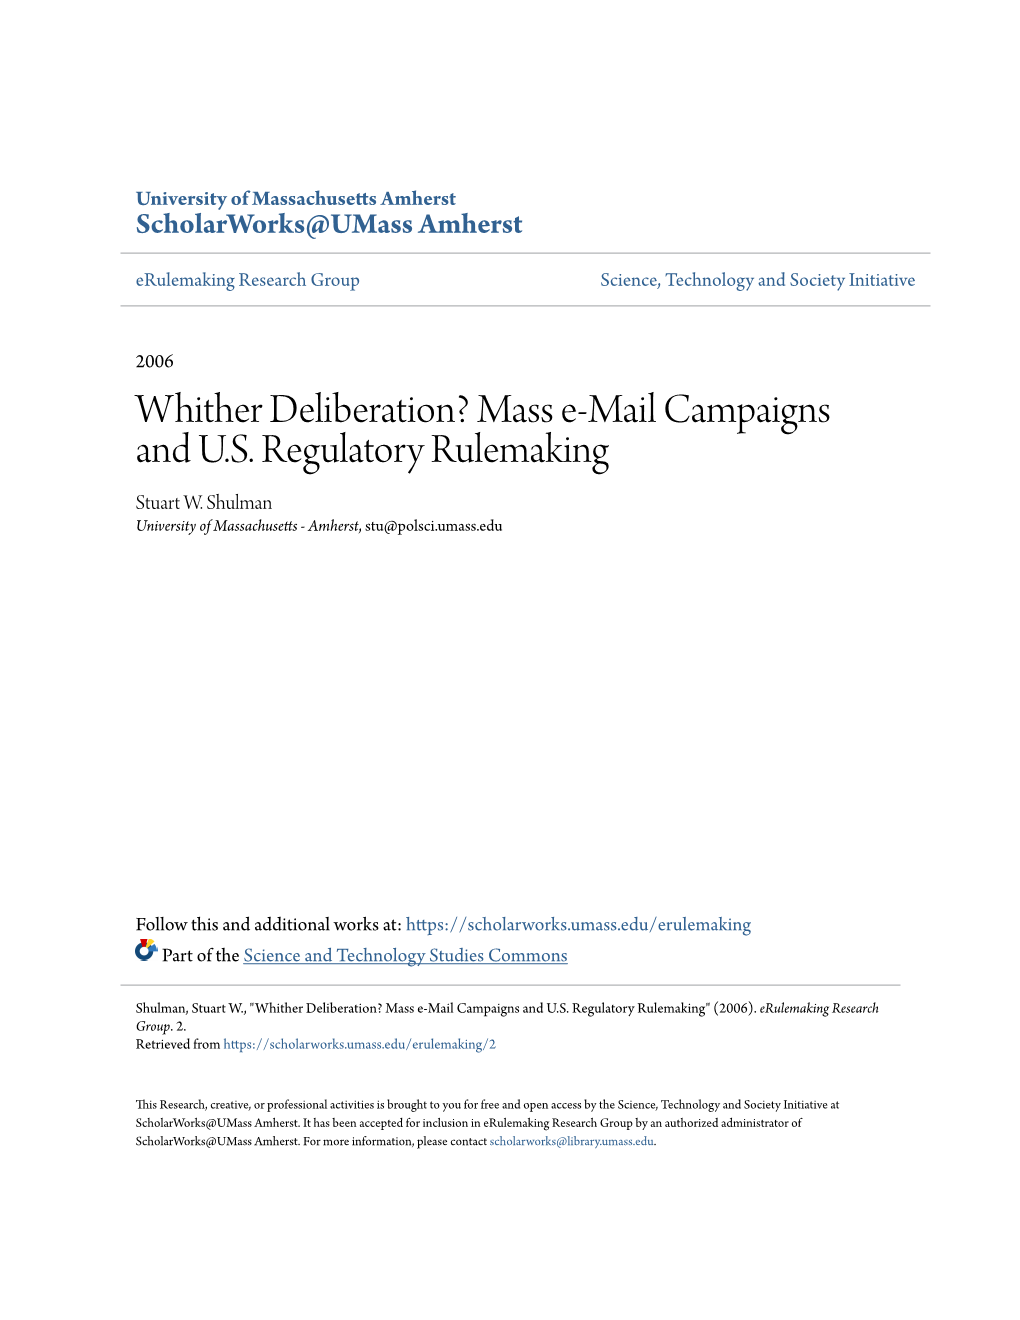 Mass E-Mail Campaigns and US Regulatory Rulemaking